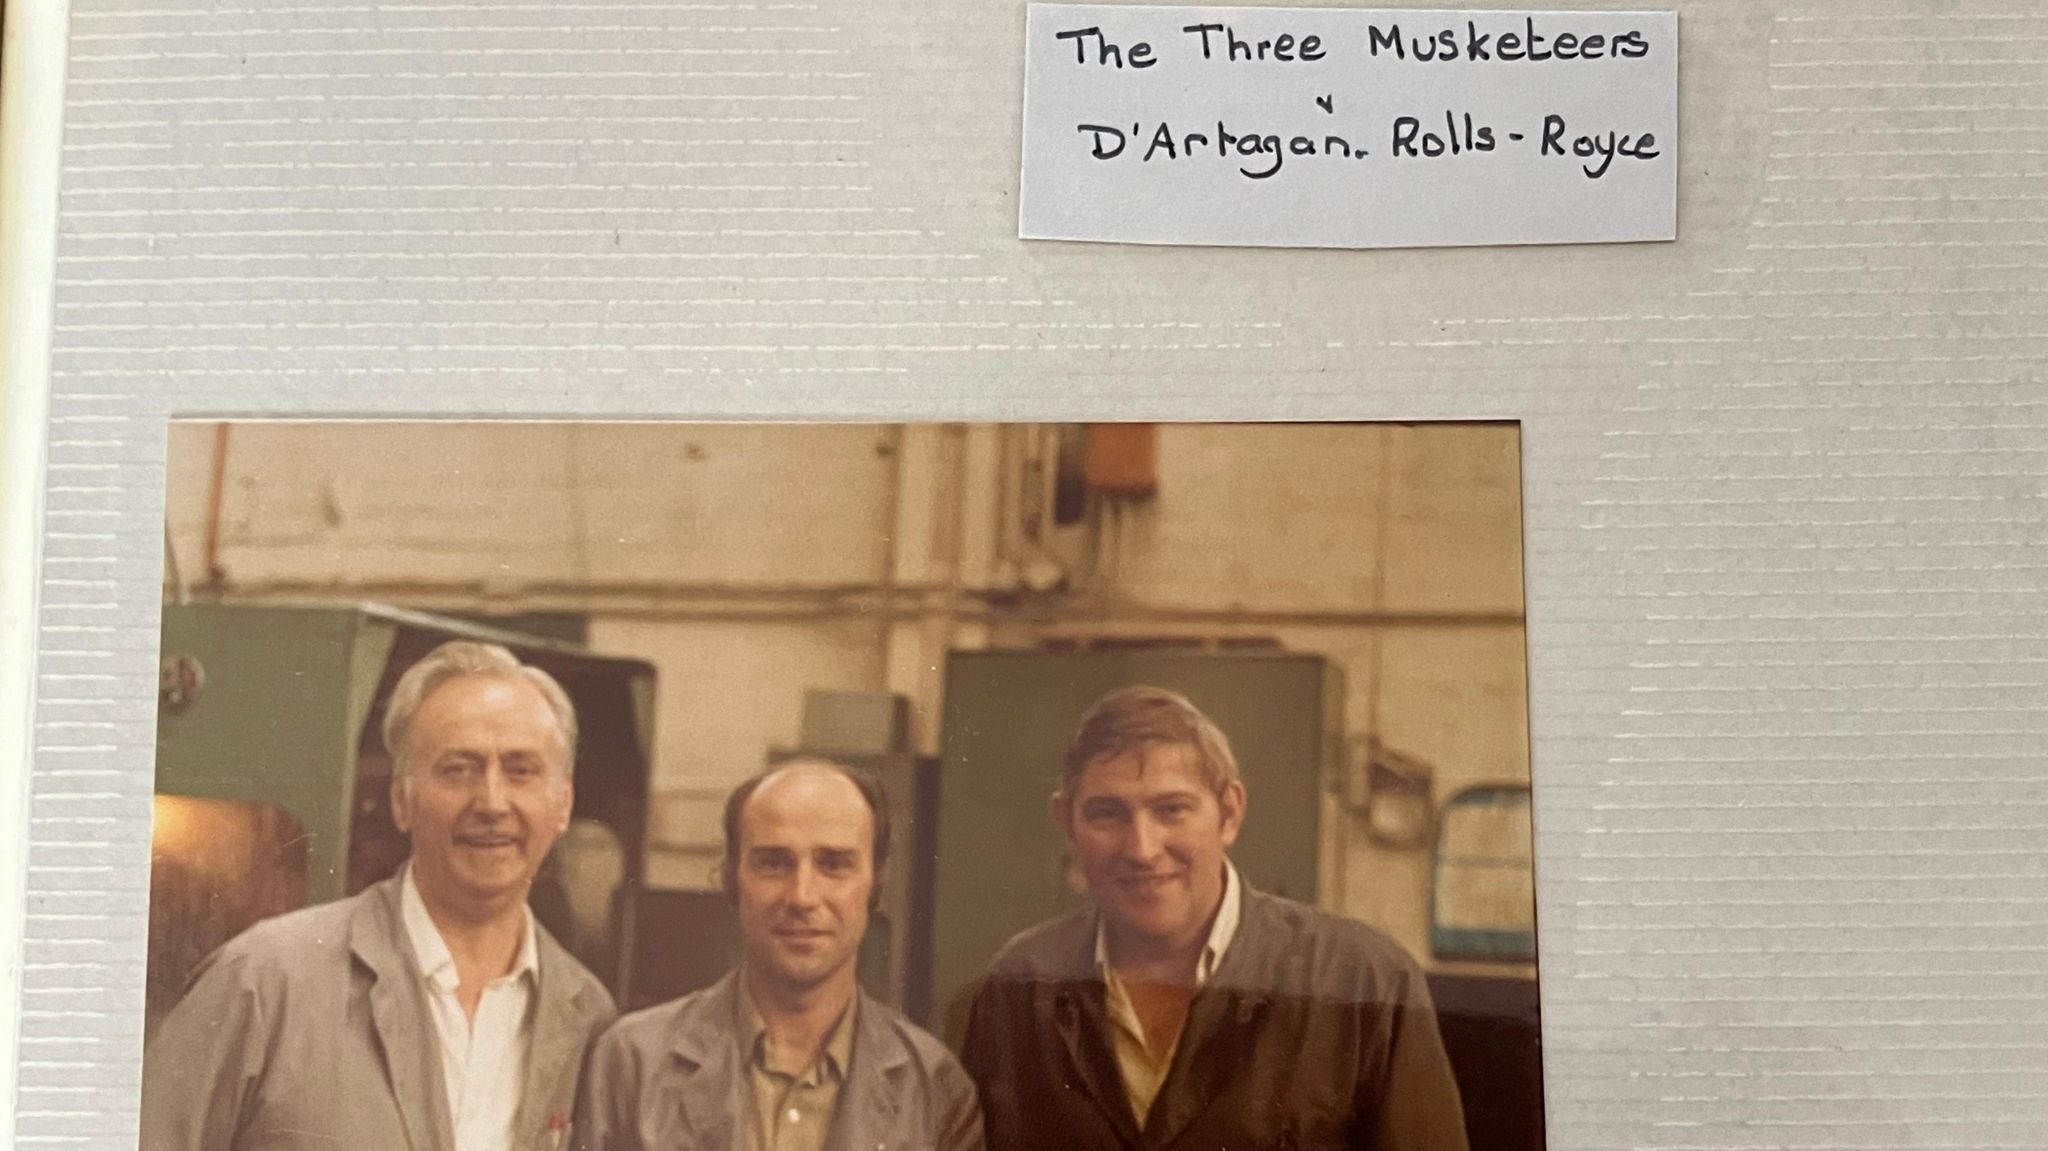 Photo of three men from album